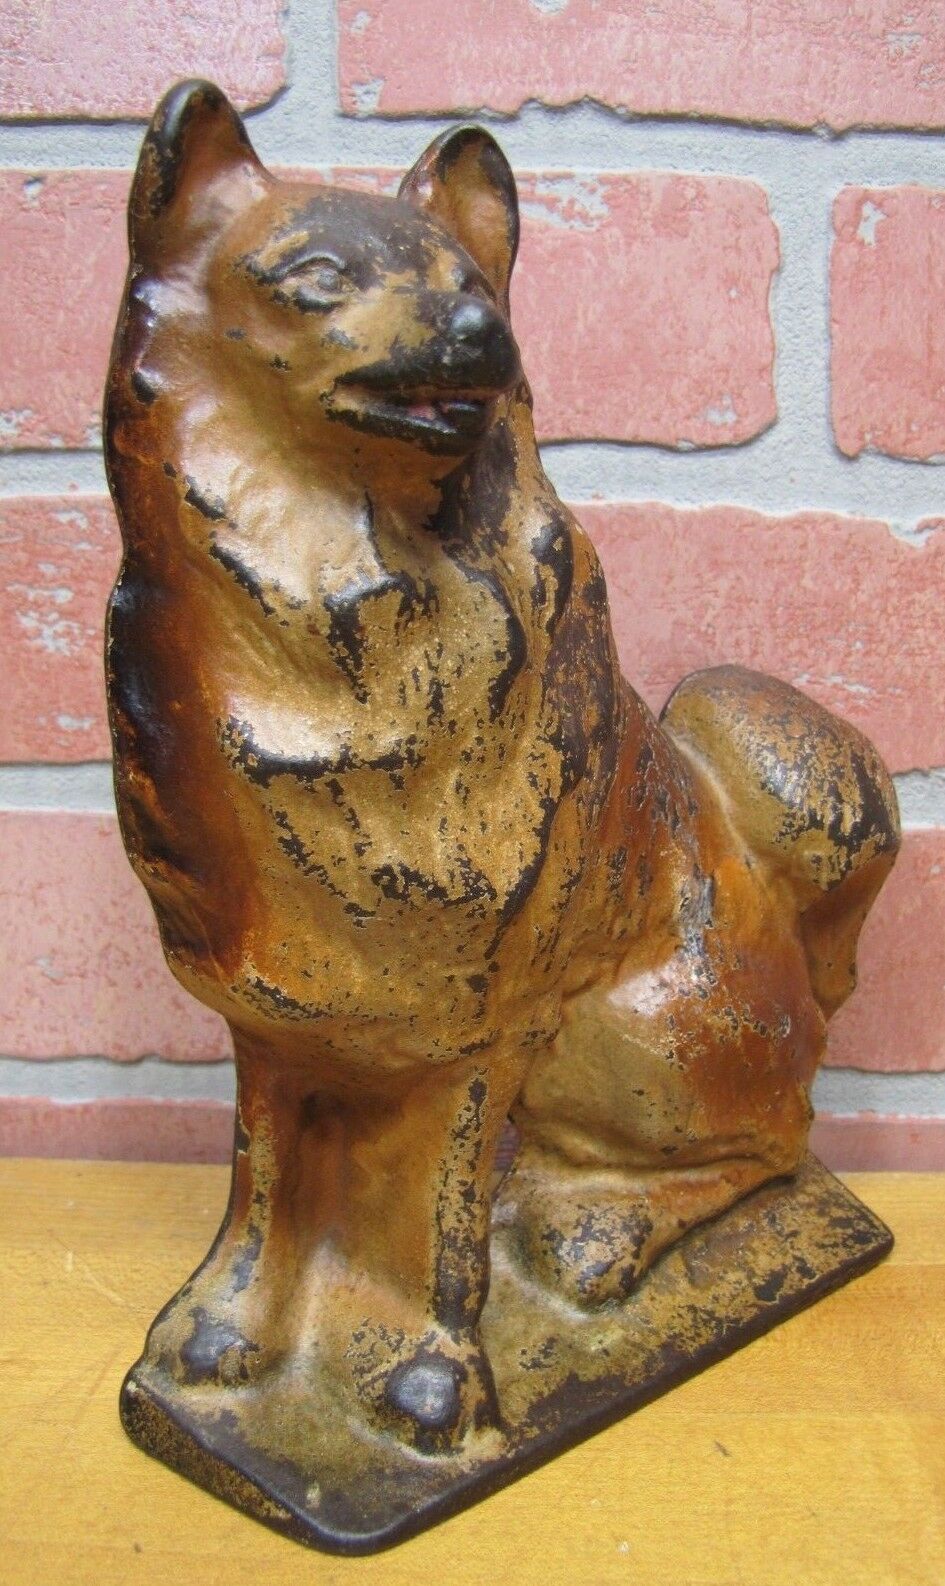 MALAMUTE c1930 CREATION Co Old Dog Cast Iron Doorstop Decorative Art Statue